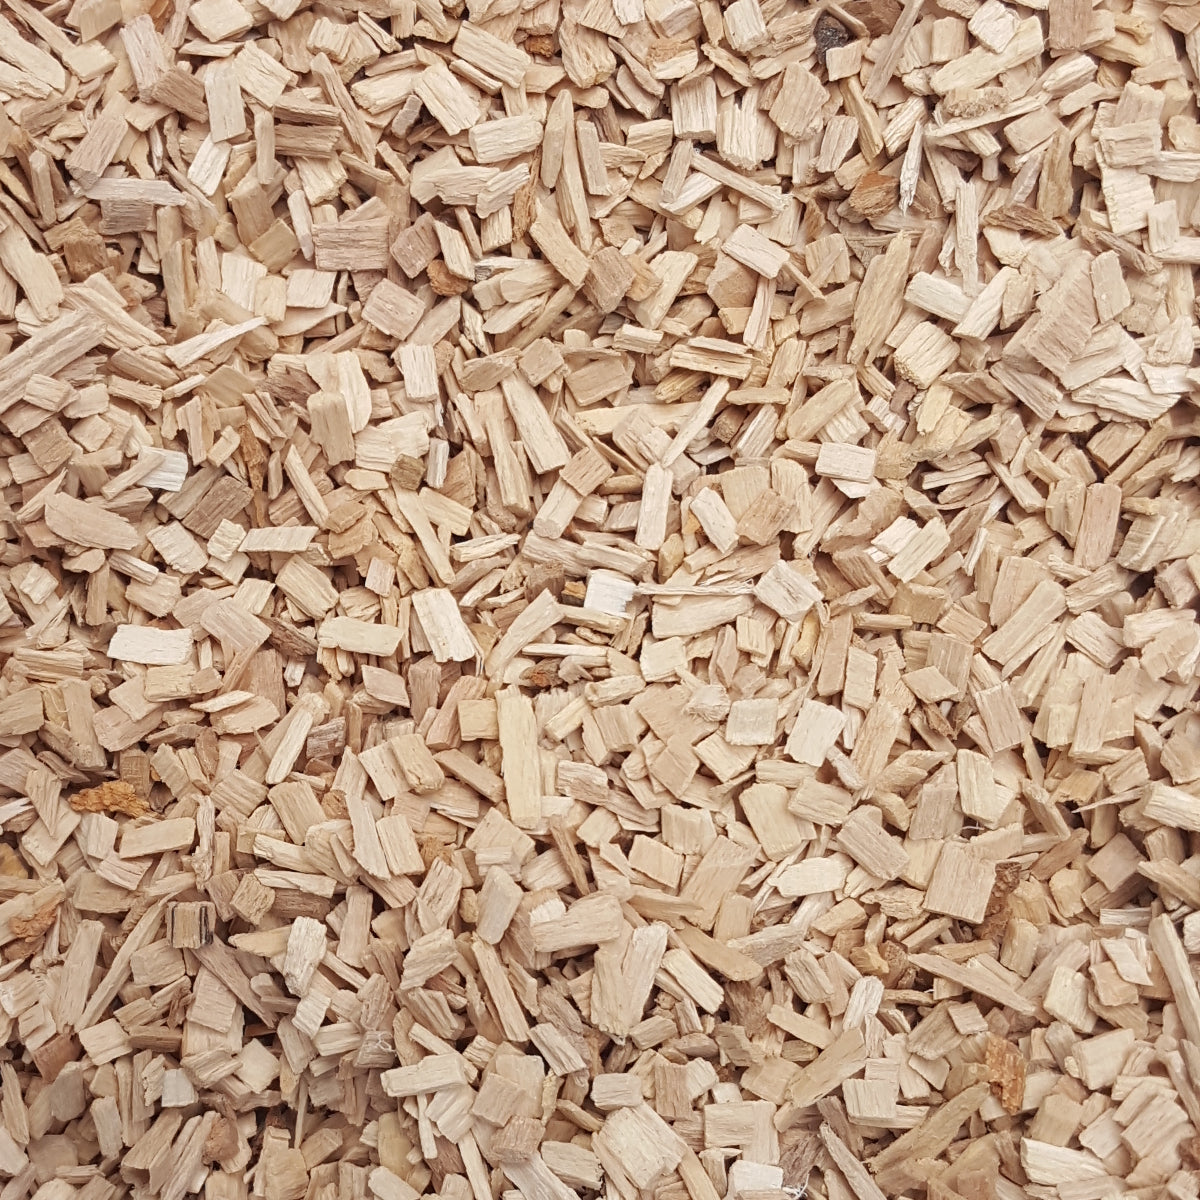 Beechwood Bedding Wood Chips Small Fine 6-8mm